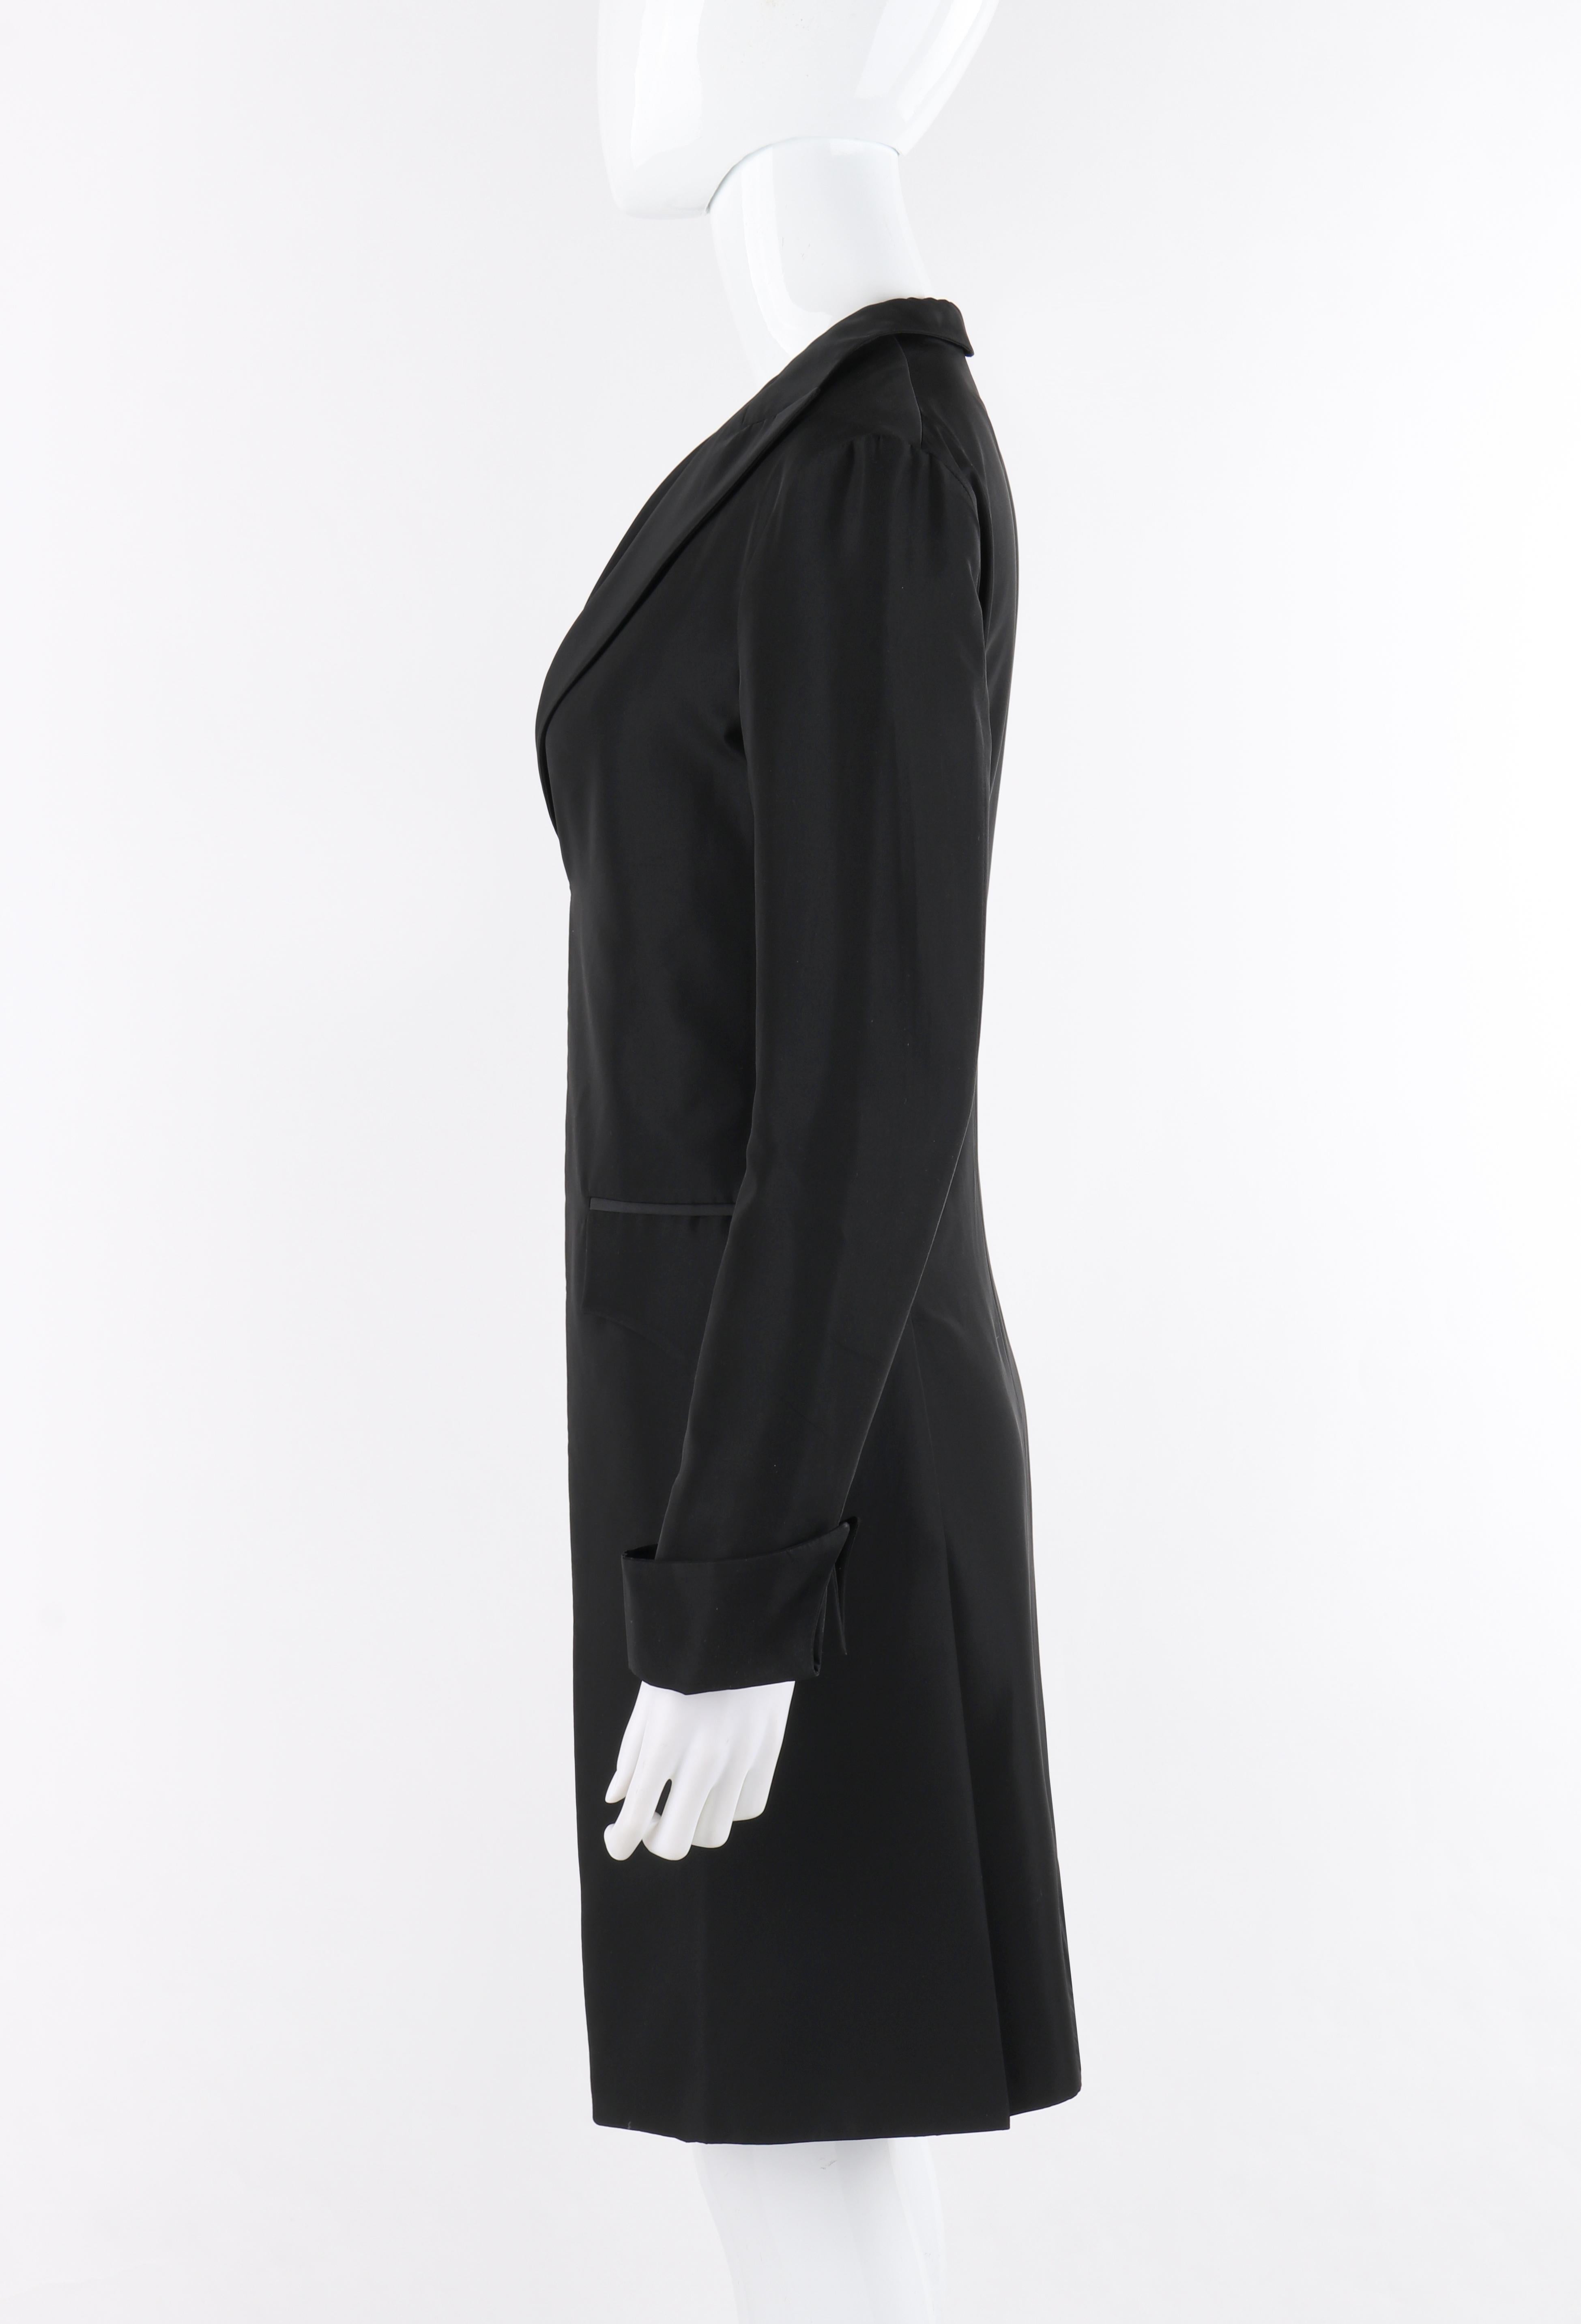 ALEXANDER McQUEEN S/S 1997 “La Poupee” Black Single Closure Cutaway Dress Jacket In Good Condition For Sale In Thiensville, WI